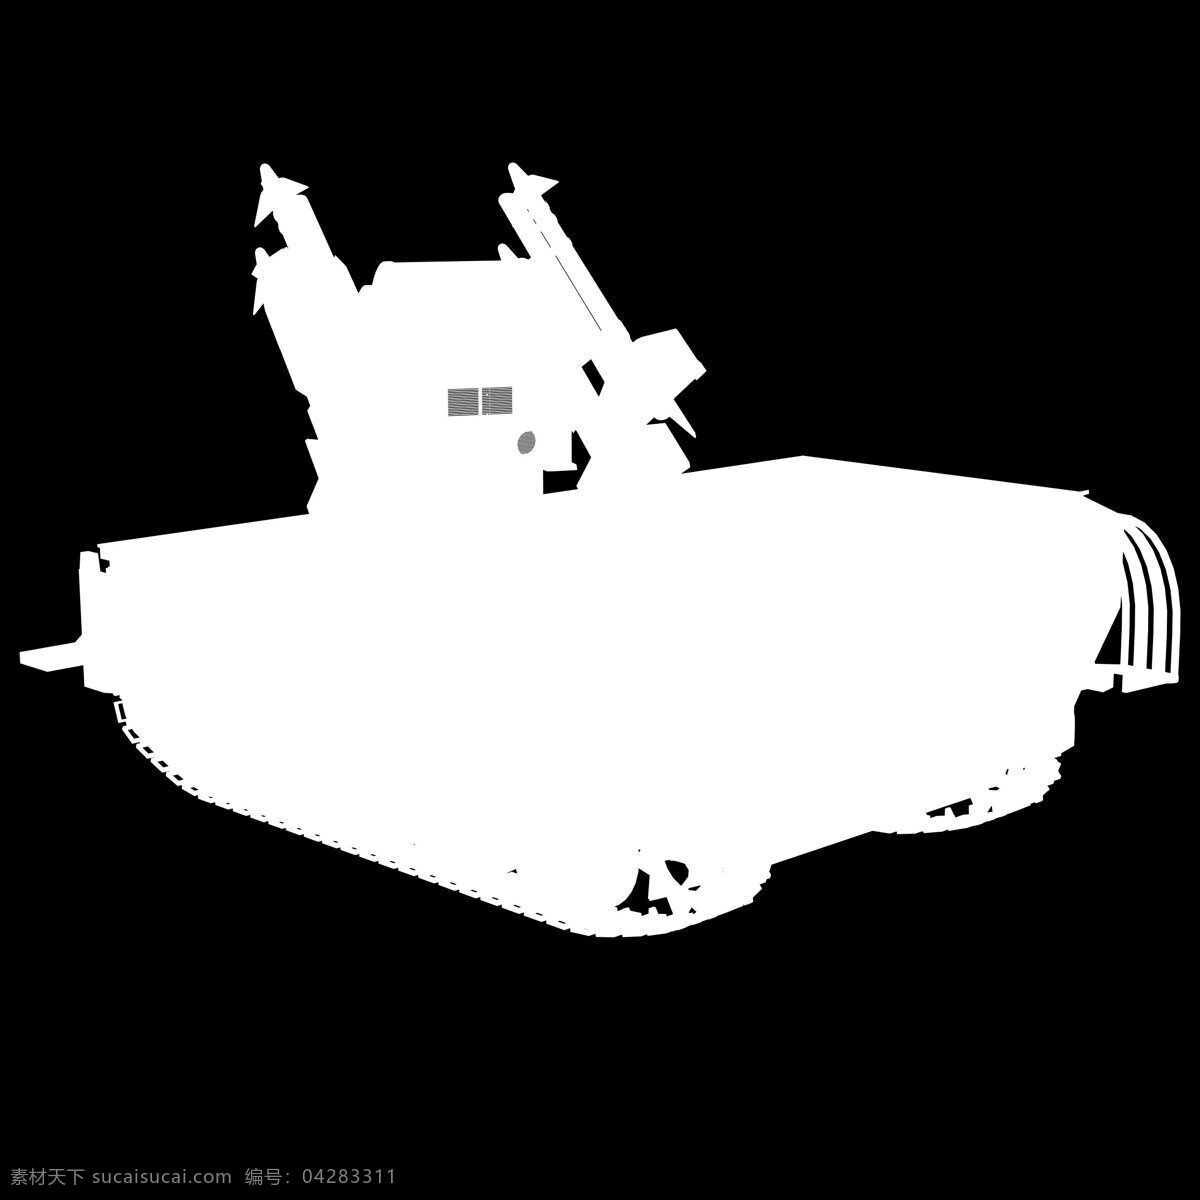 3dmax 模型 3d模型 3d汽车模型 3d设计模型 max 源文件 展示模型 装甲车 模板下载 装甲车模型 3d装甲车 3d 原 文件 专题 3d模型素材 其他3d模型